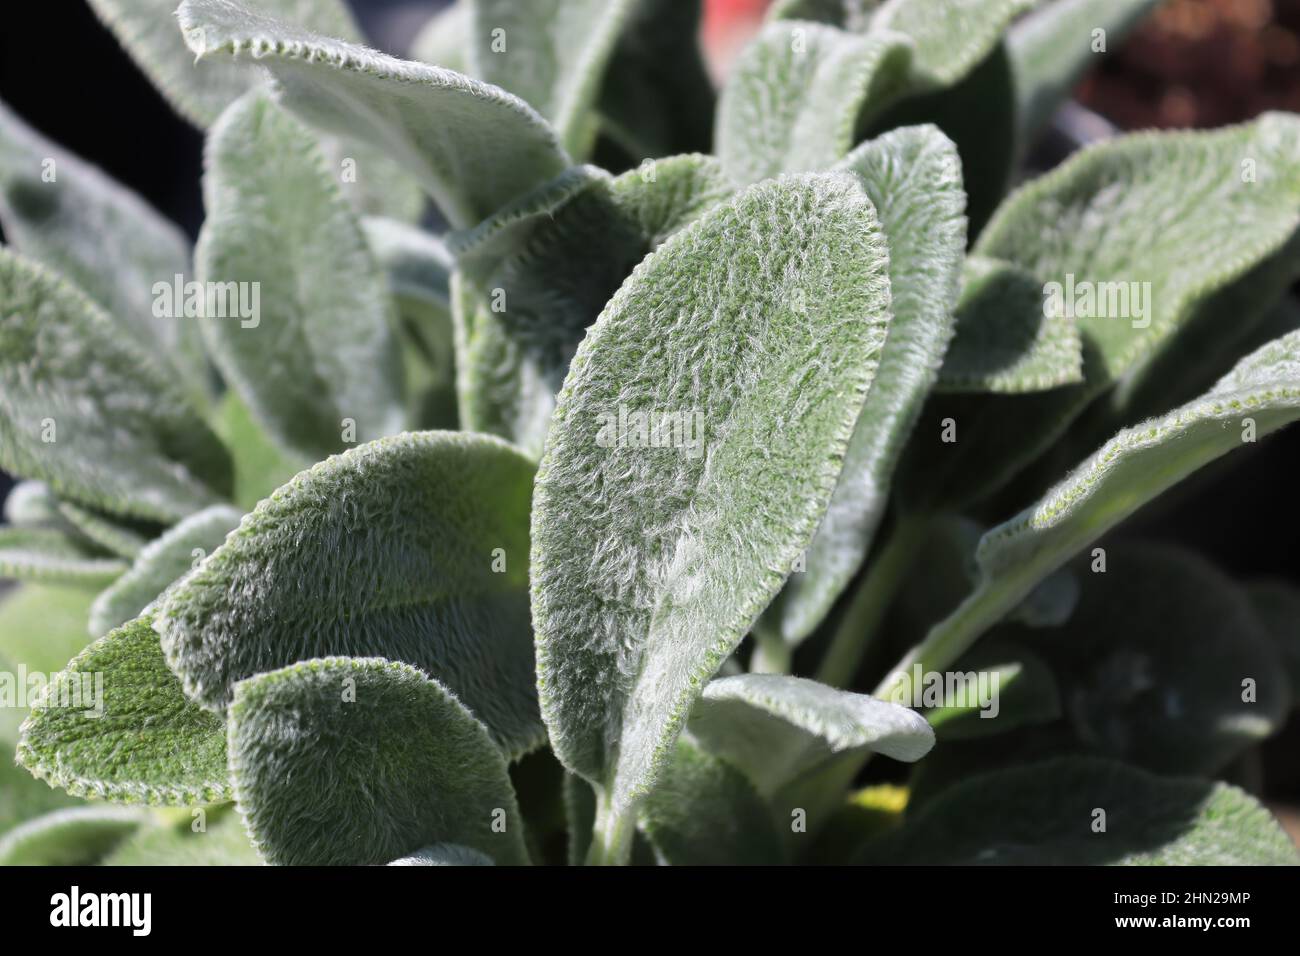 Closeup of the fuzzy leaves on a lambear plant Stock Photo